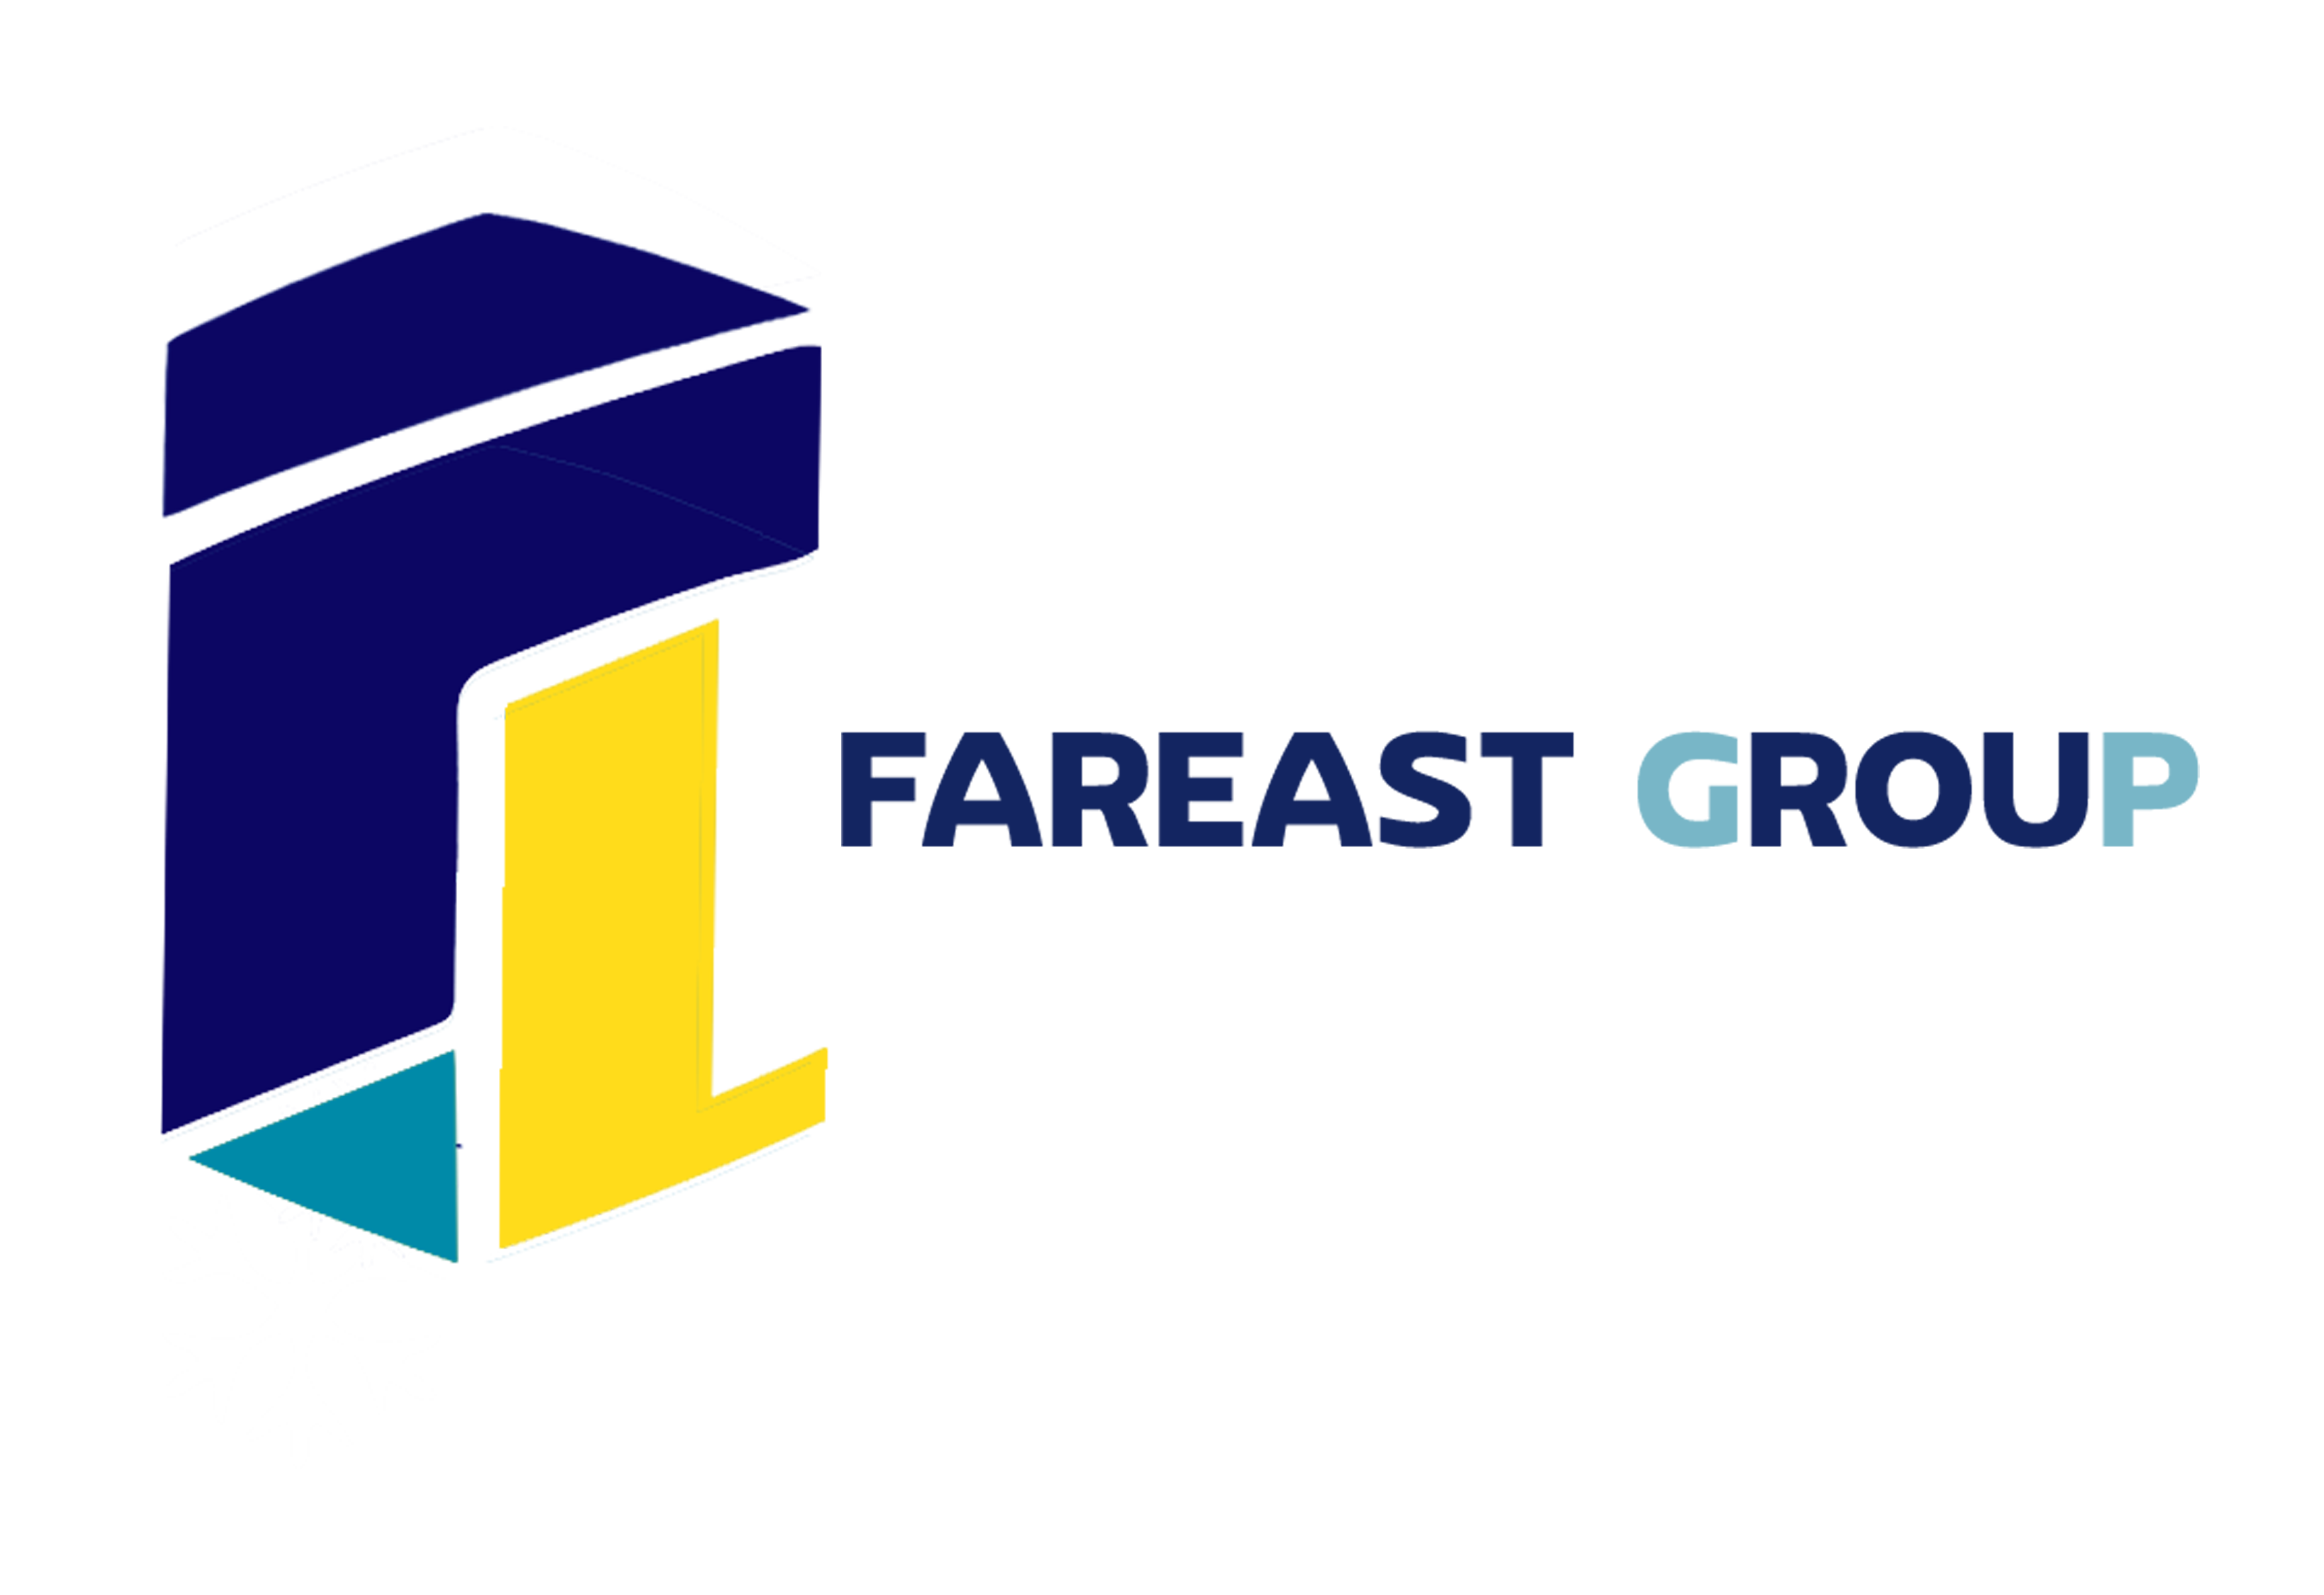 Fareast Group